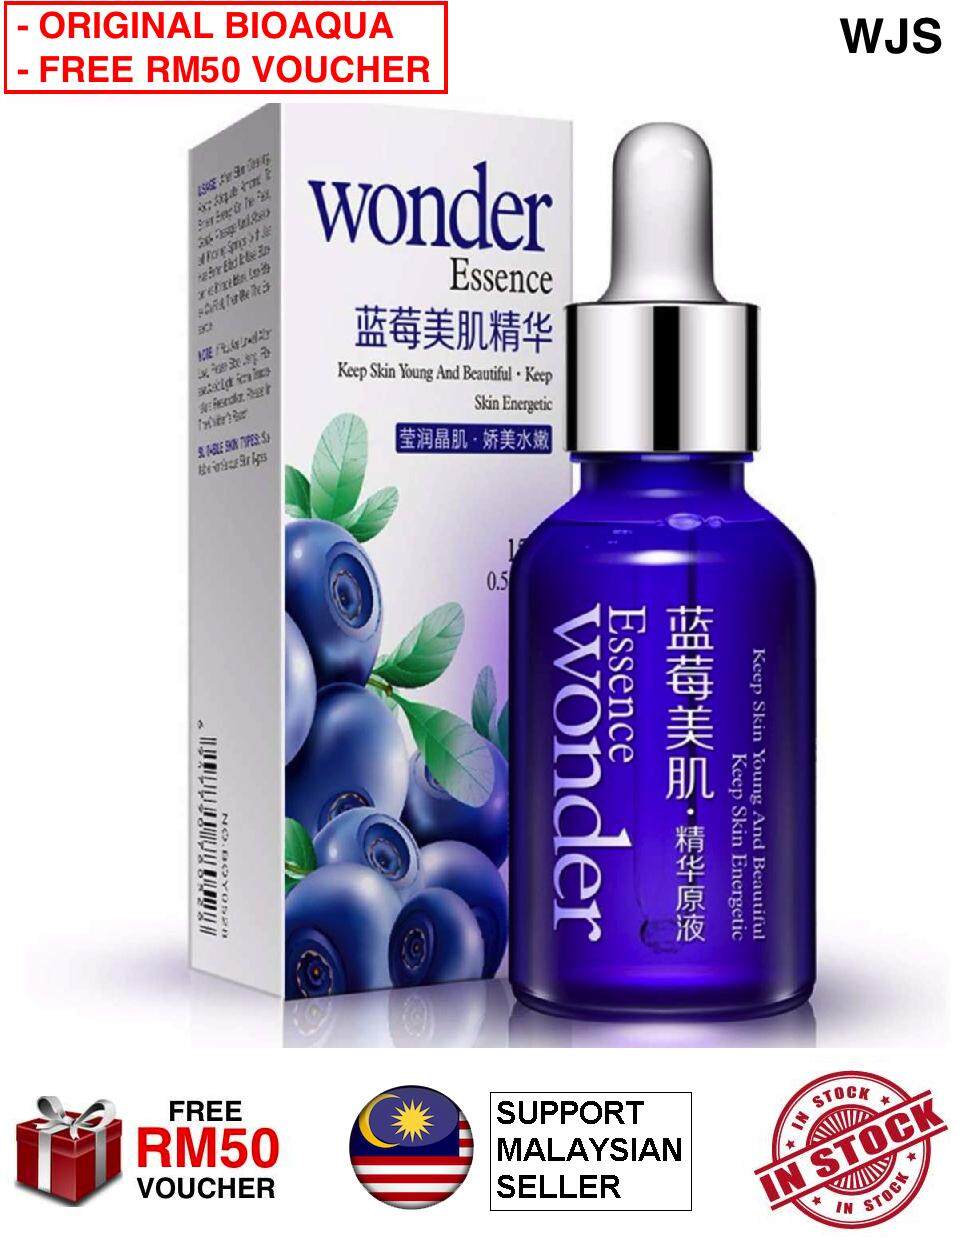 (ORIGINAL BIOAQUA) WJS BioAqua Wonder Essence Anti Wrinkle Anti Aging Collagen Pure Essence Face Whitening Moisturizing Oil (FREE RM50 VOUCHER)